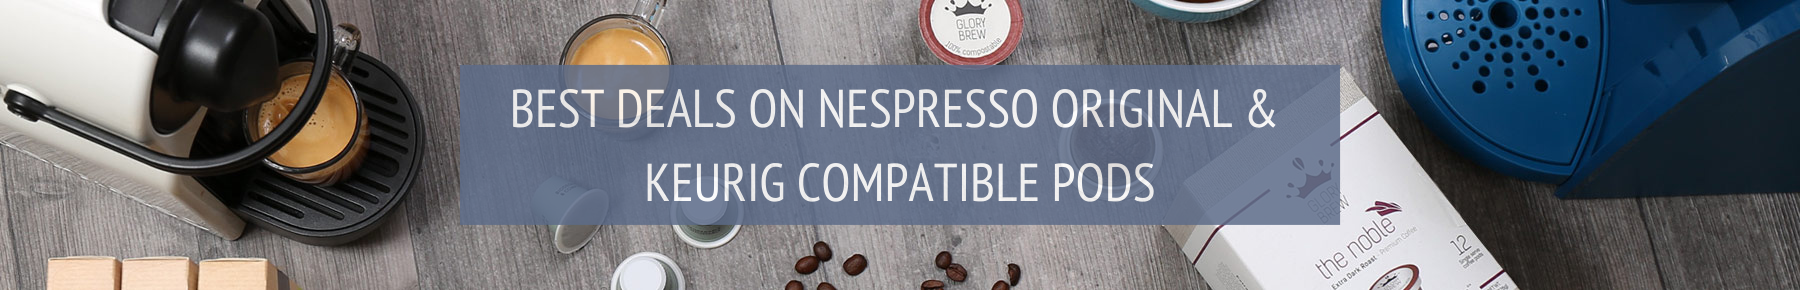 KleanPerk Cleaning Pods 5ct - For Nespresso Original Machines - Gourmesso  Coffee